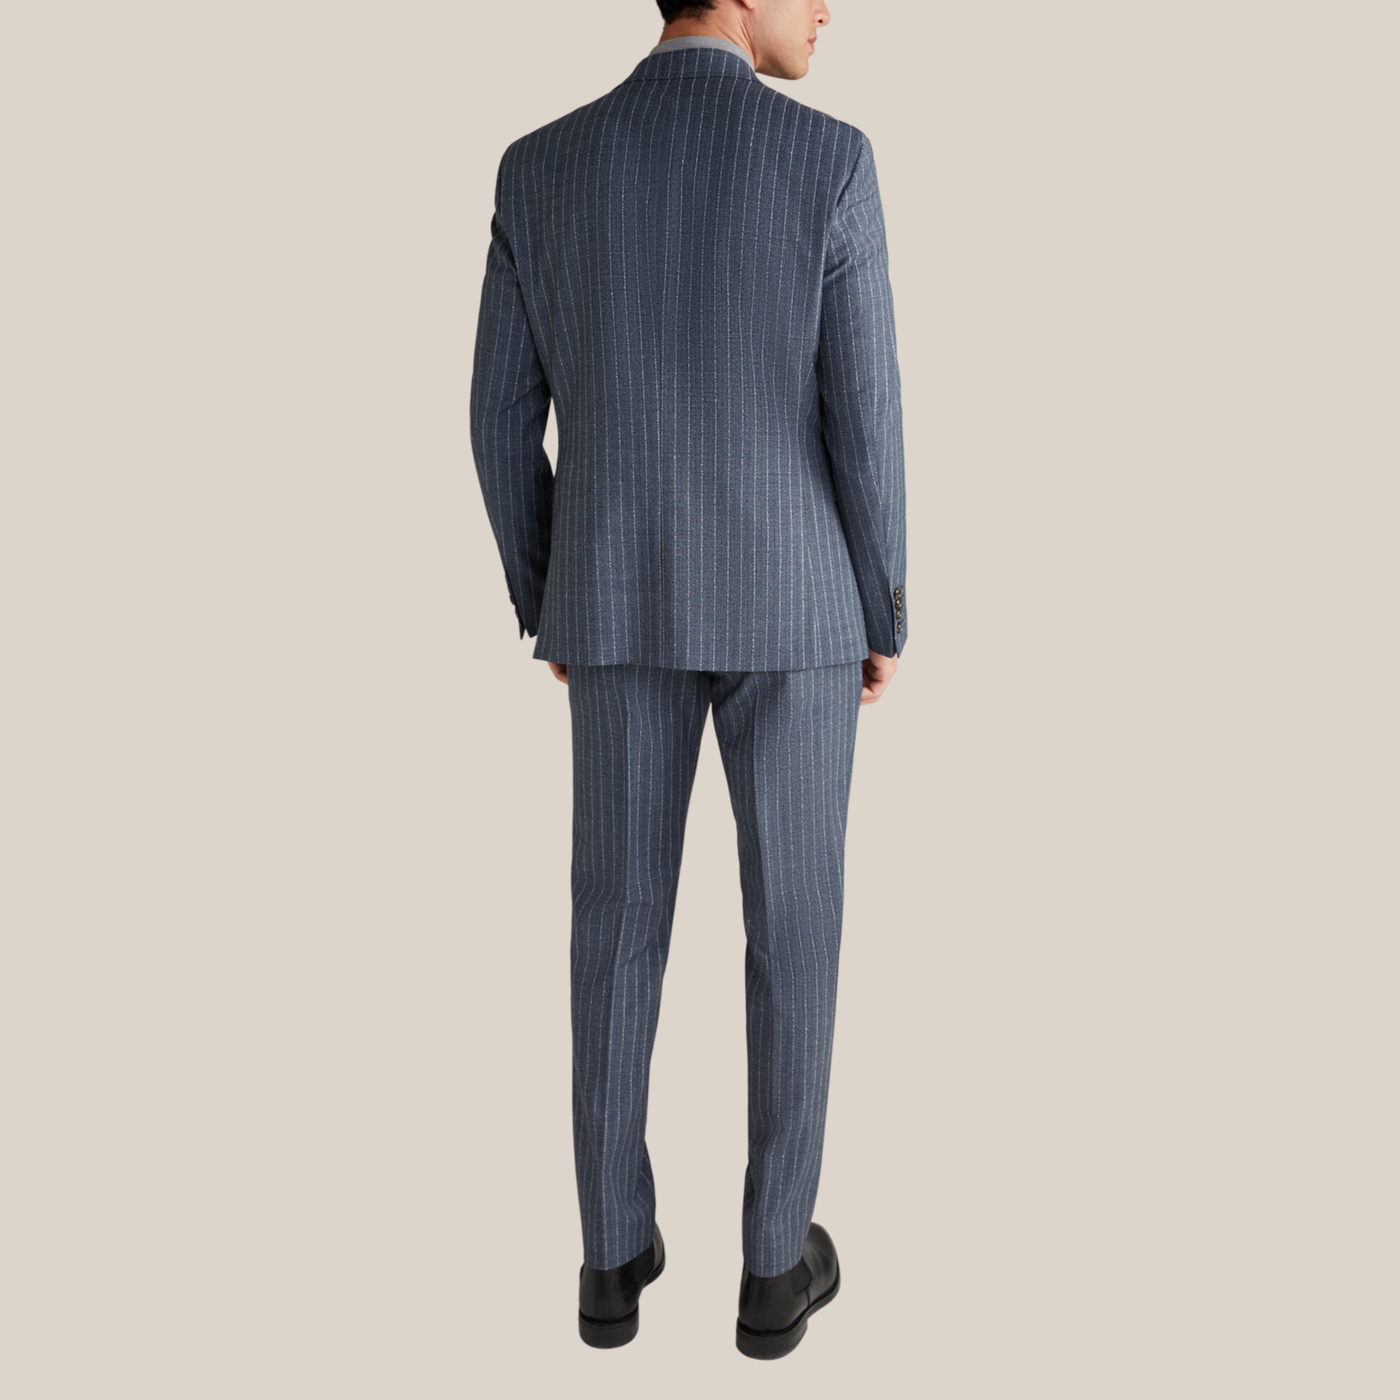 Gotstyle Fashion - Joop! Suits Broken Pinstripe Stretch Wool Suit - Blue